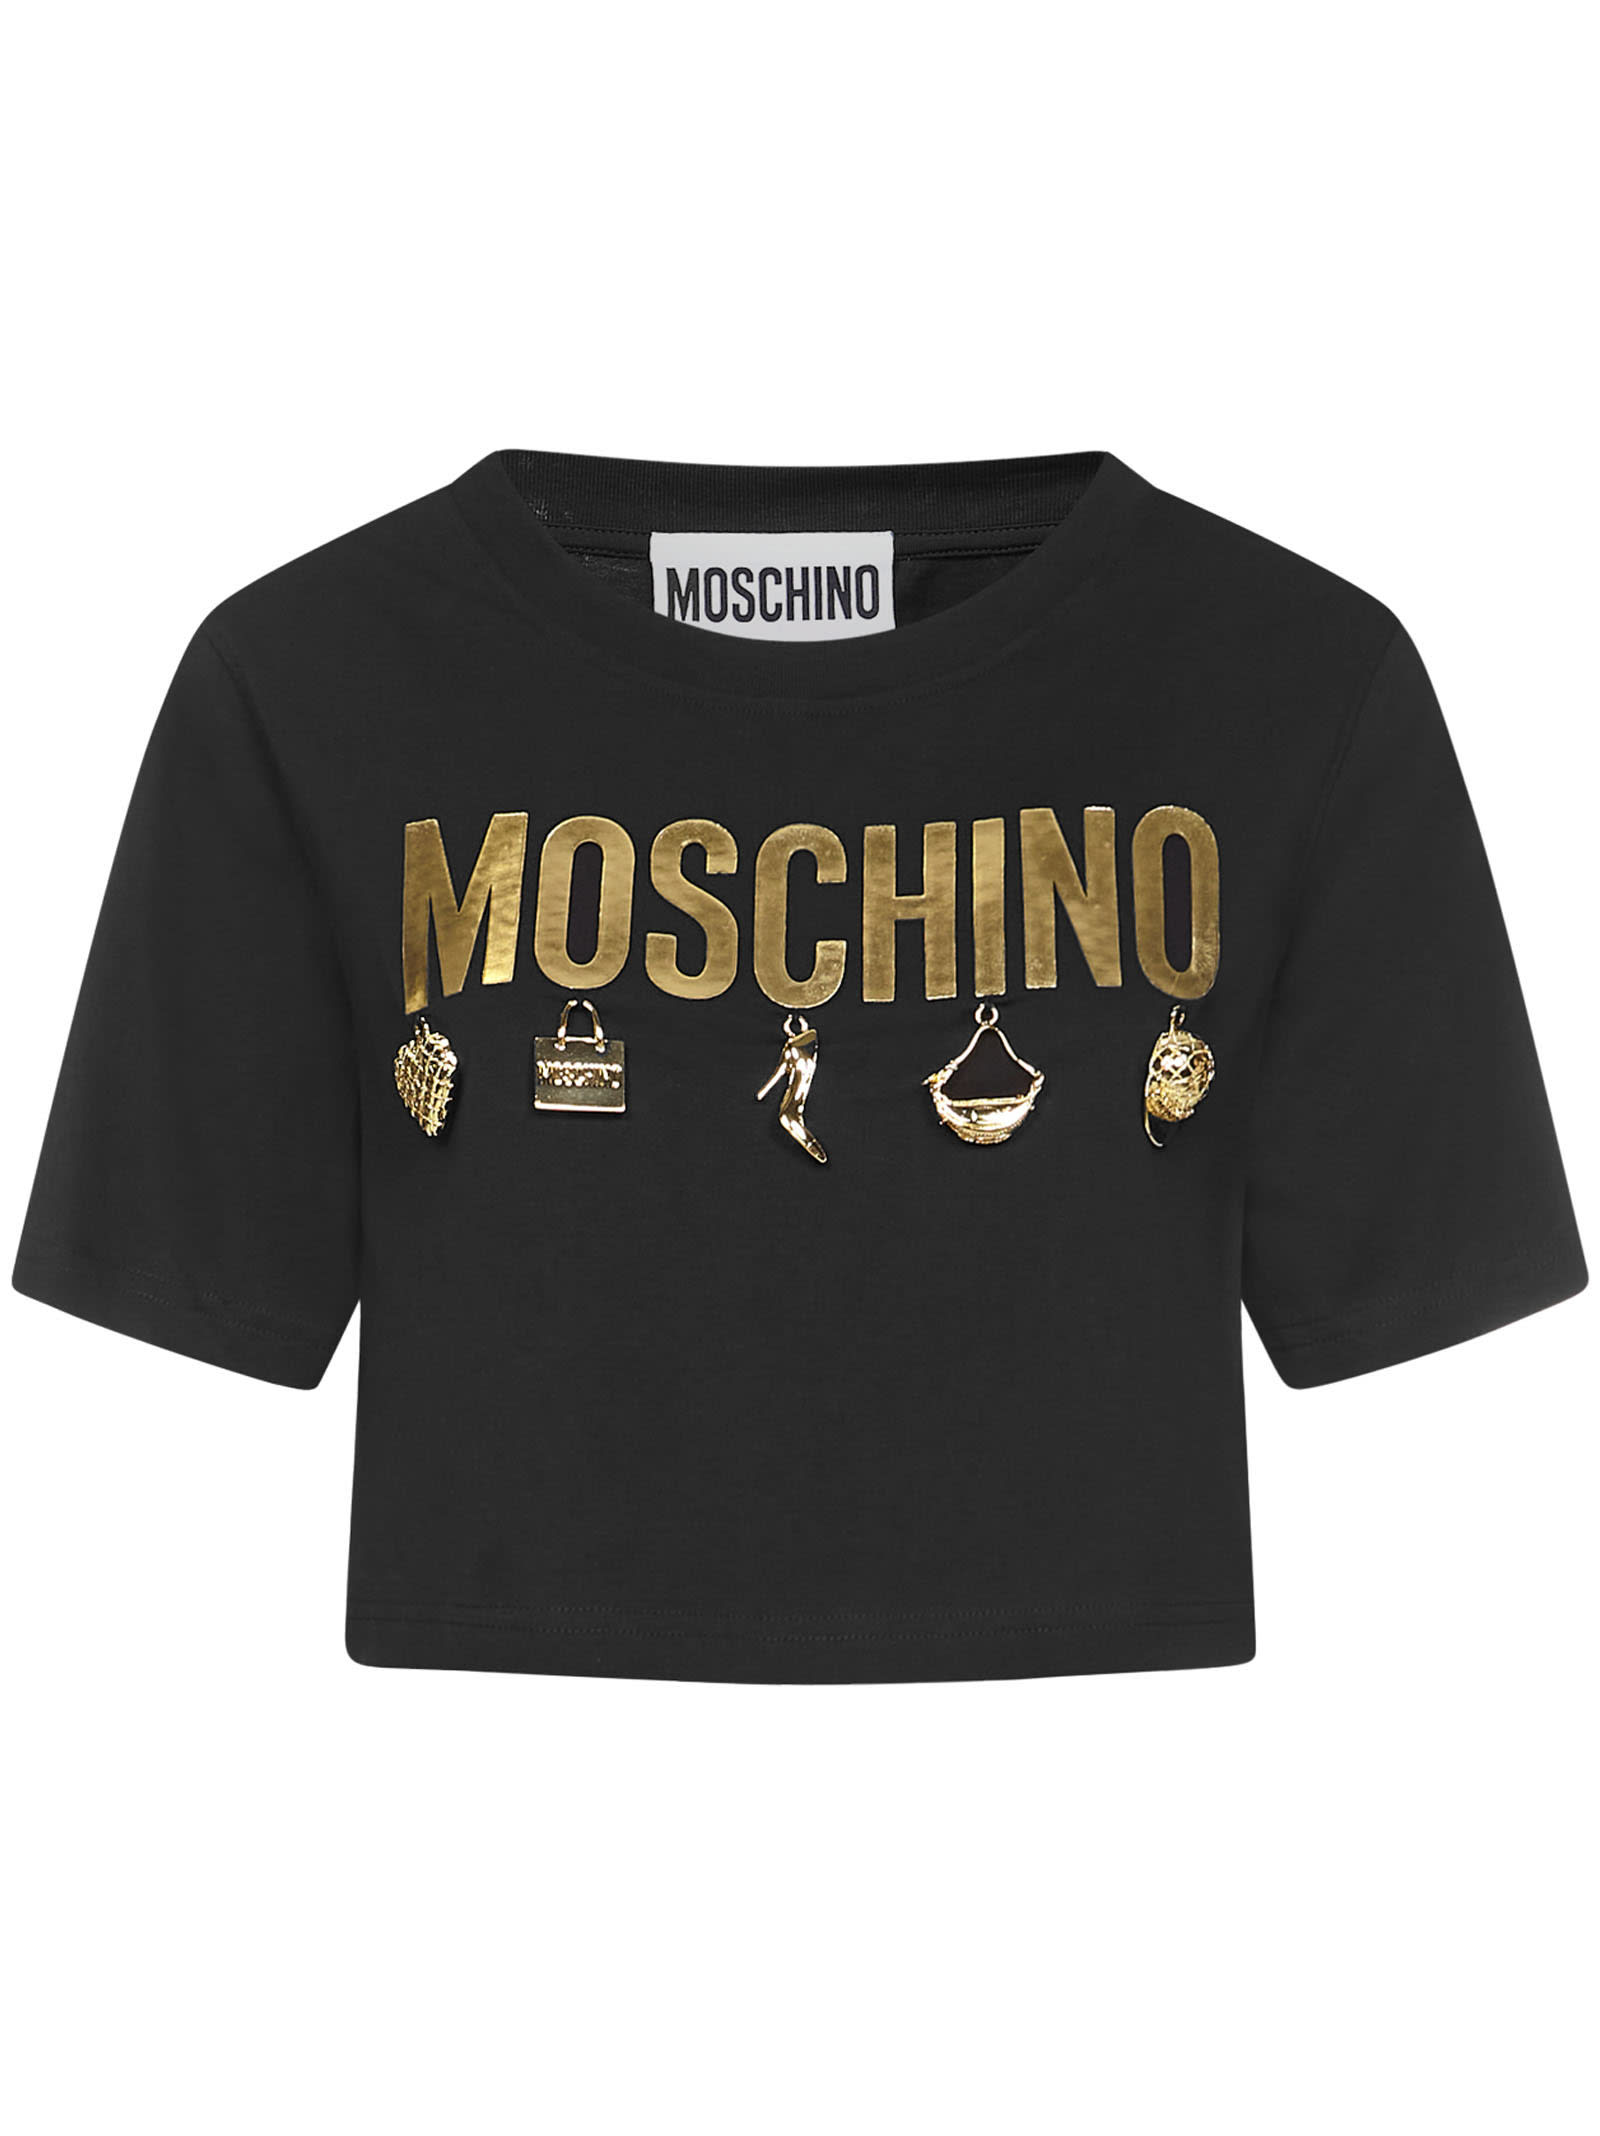 Moschino Moschino Charms T-shirt